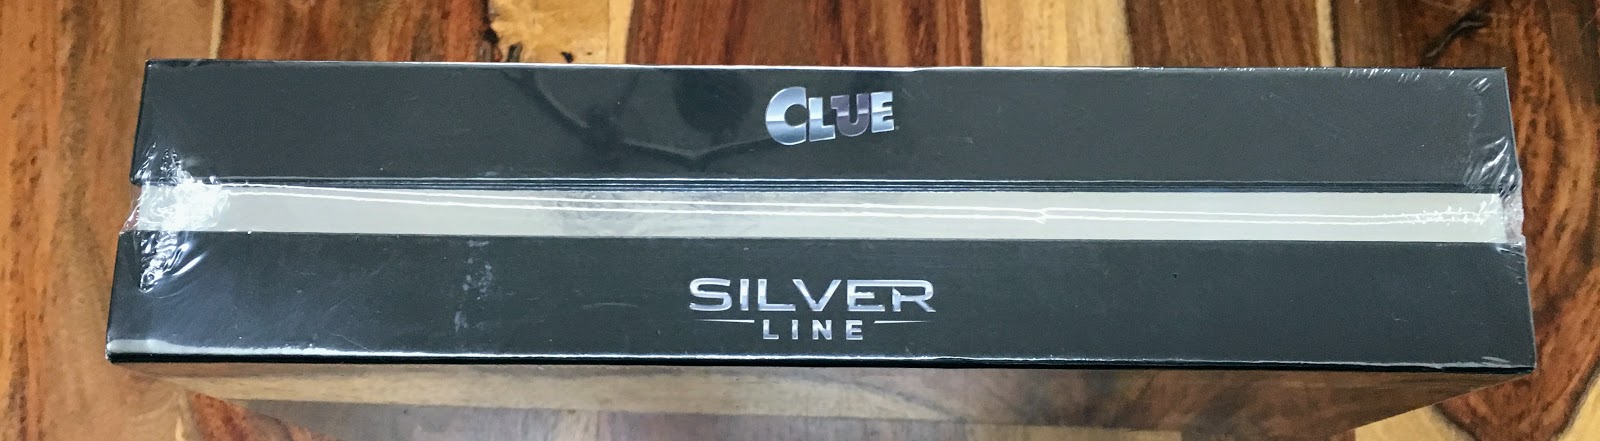 Wargames and Railroads: Clue - Silver Line